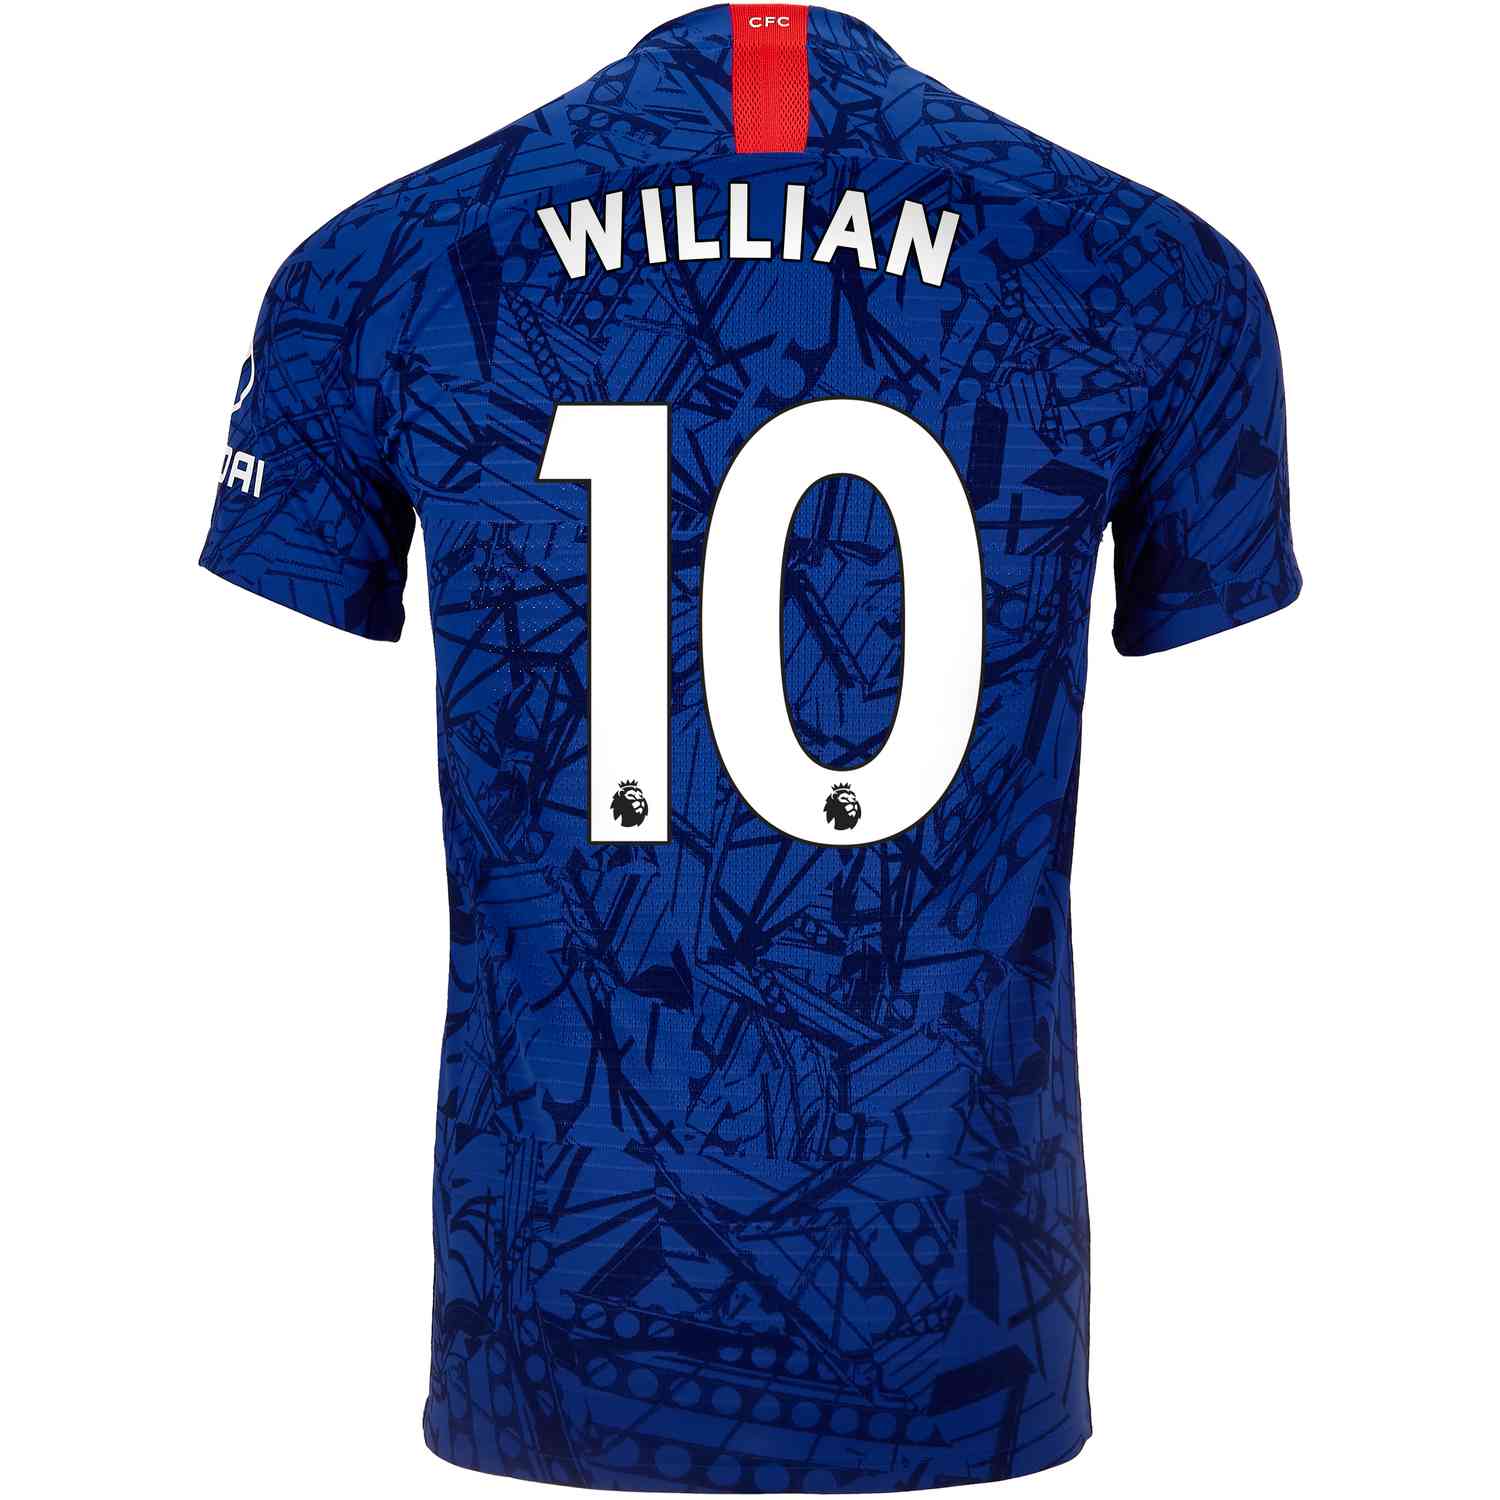 2019/20 Nike Willian Chelsea Home Match 